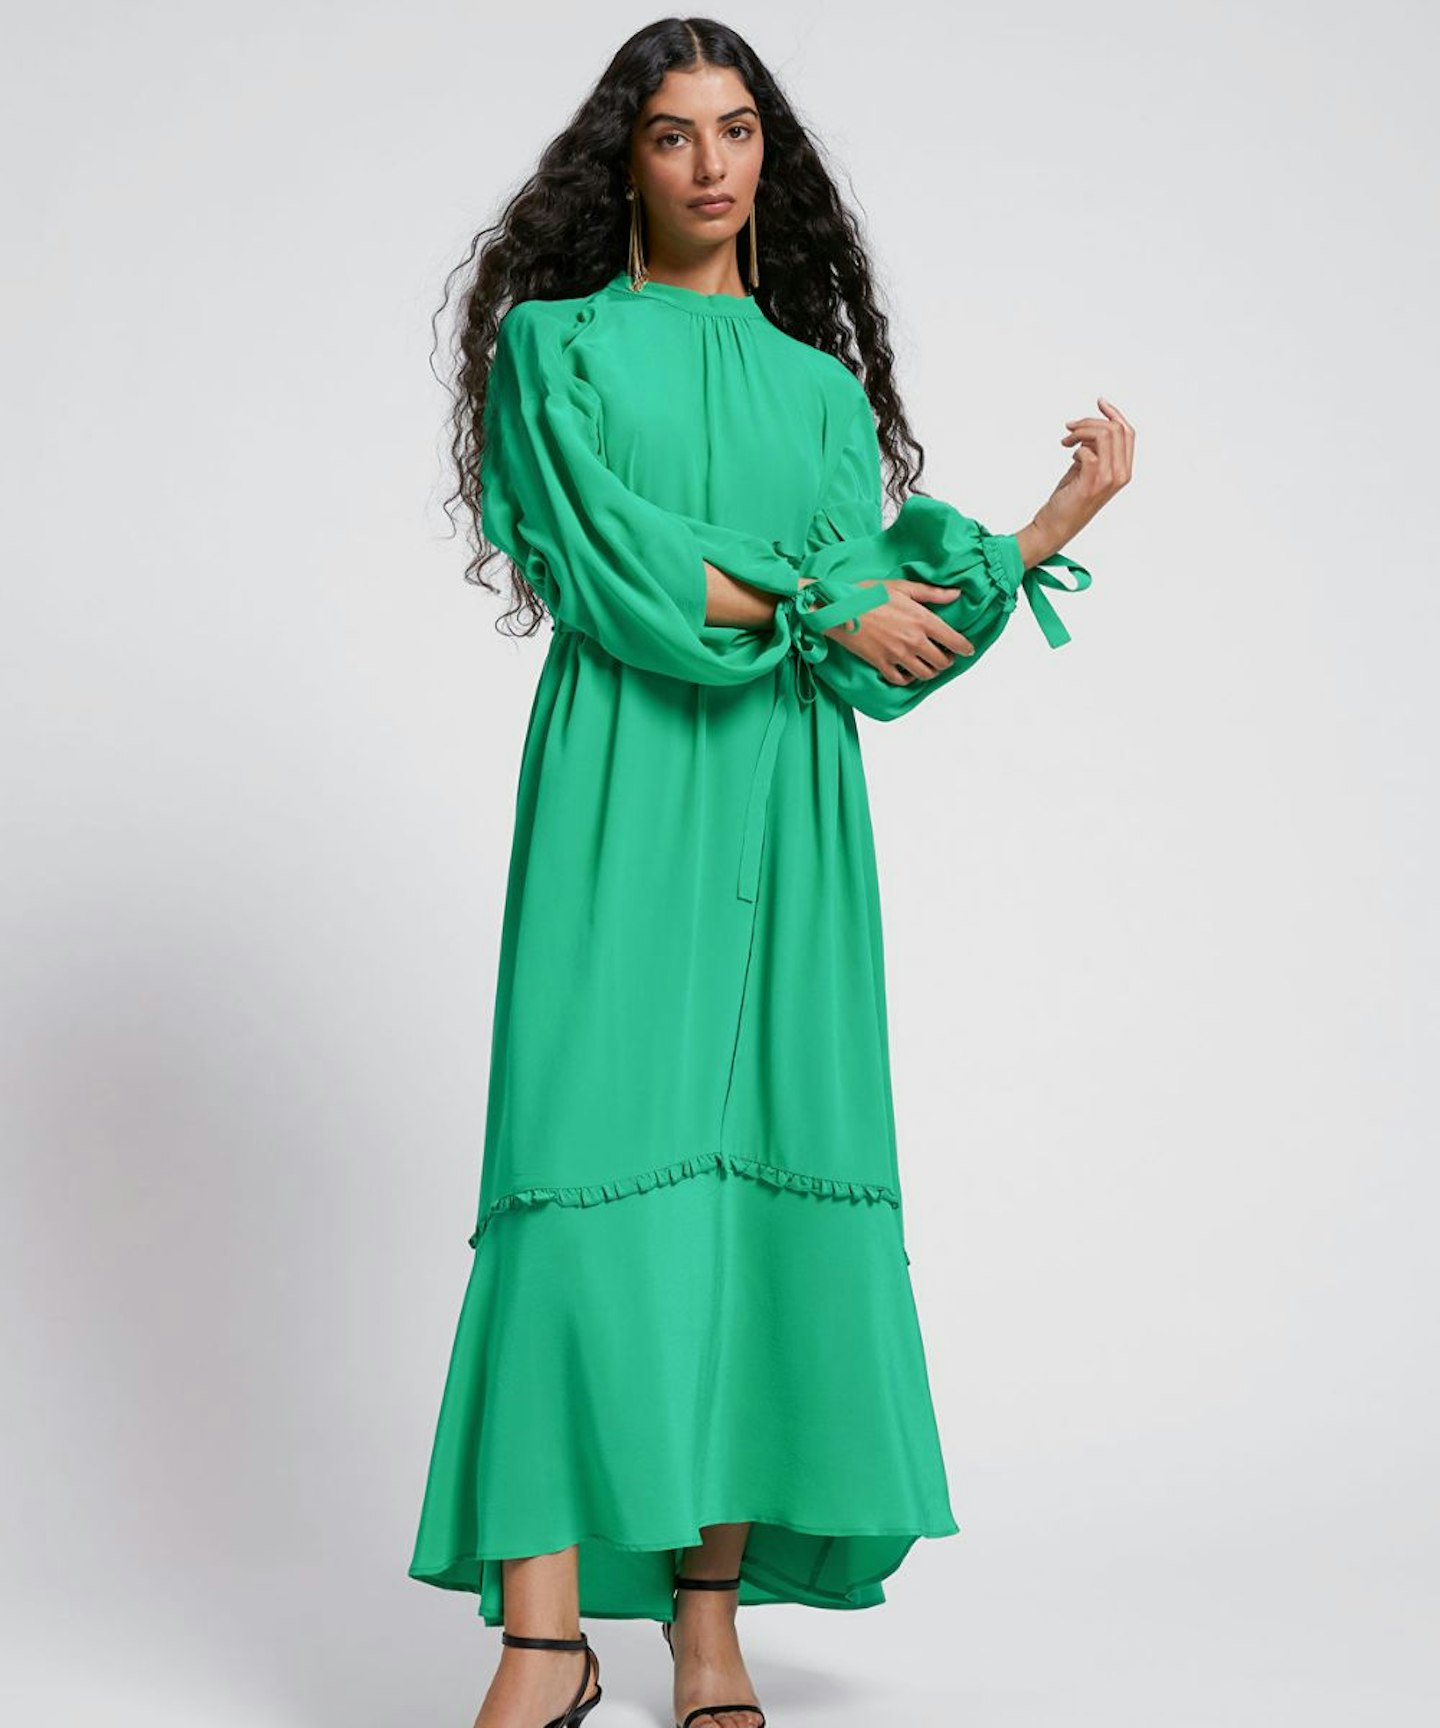 & Other Stories, Fluid-Fit Wide Sleeve Silk Dress